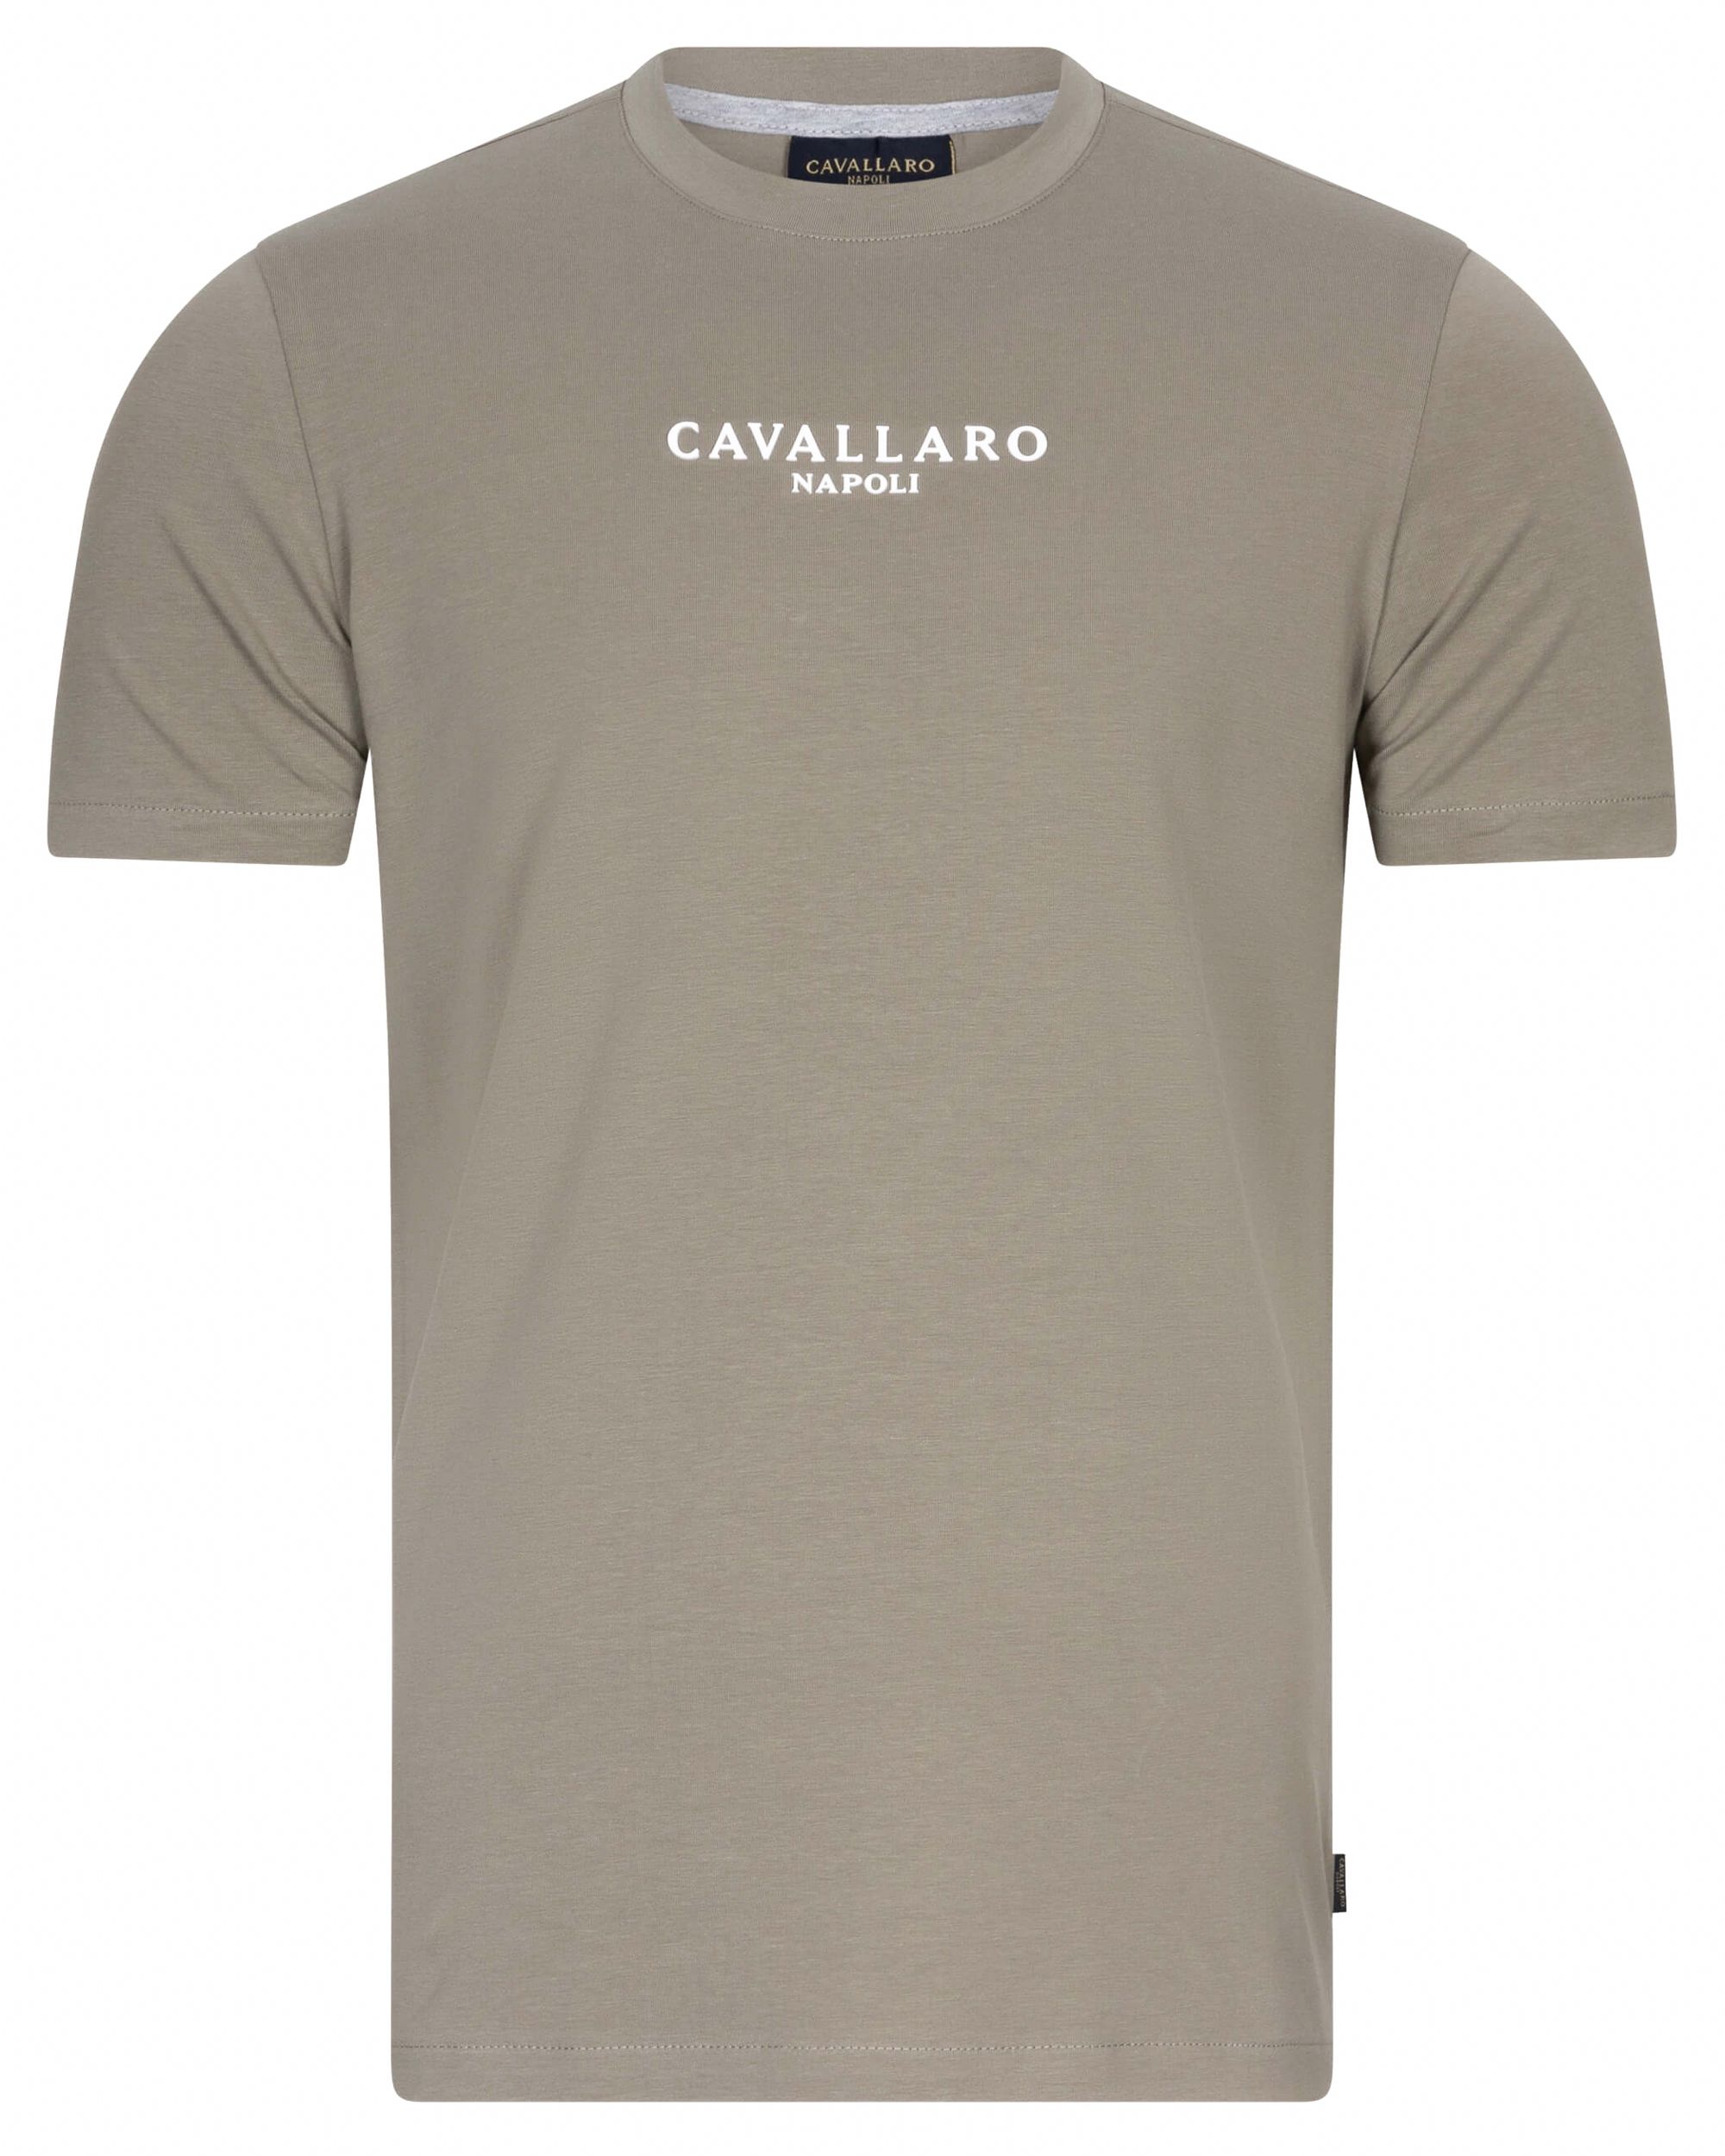 Cavallaro Bari T-shirt KM Groen 094412-001-L